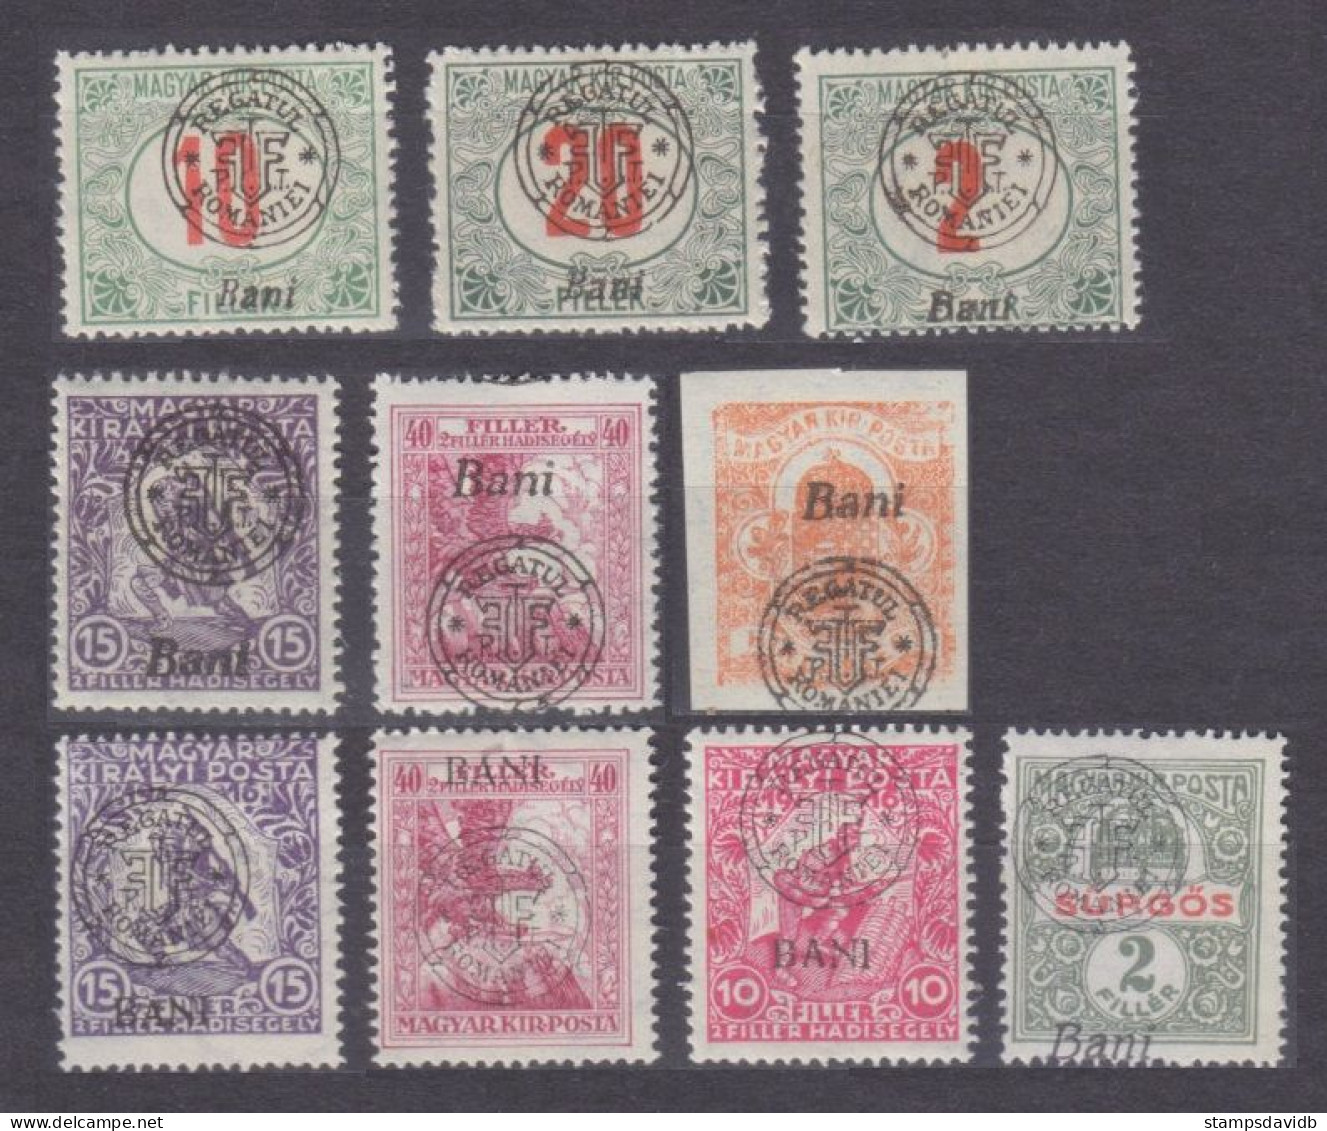 1919 Romania Hungary Debrecen 10v Overprint - Bani - World War 2 Letters